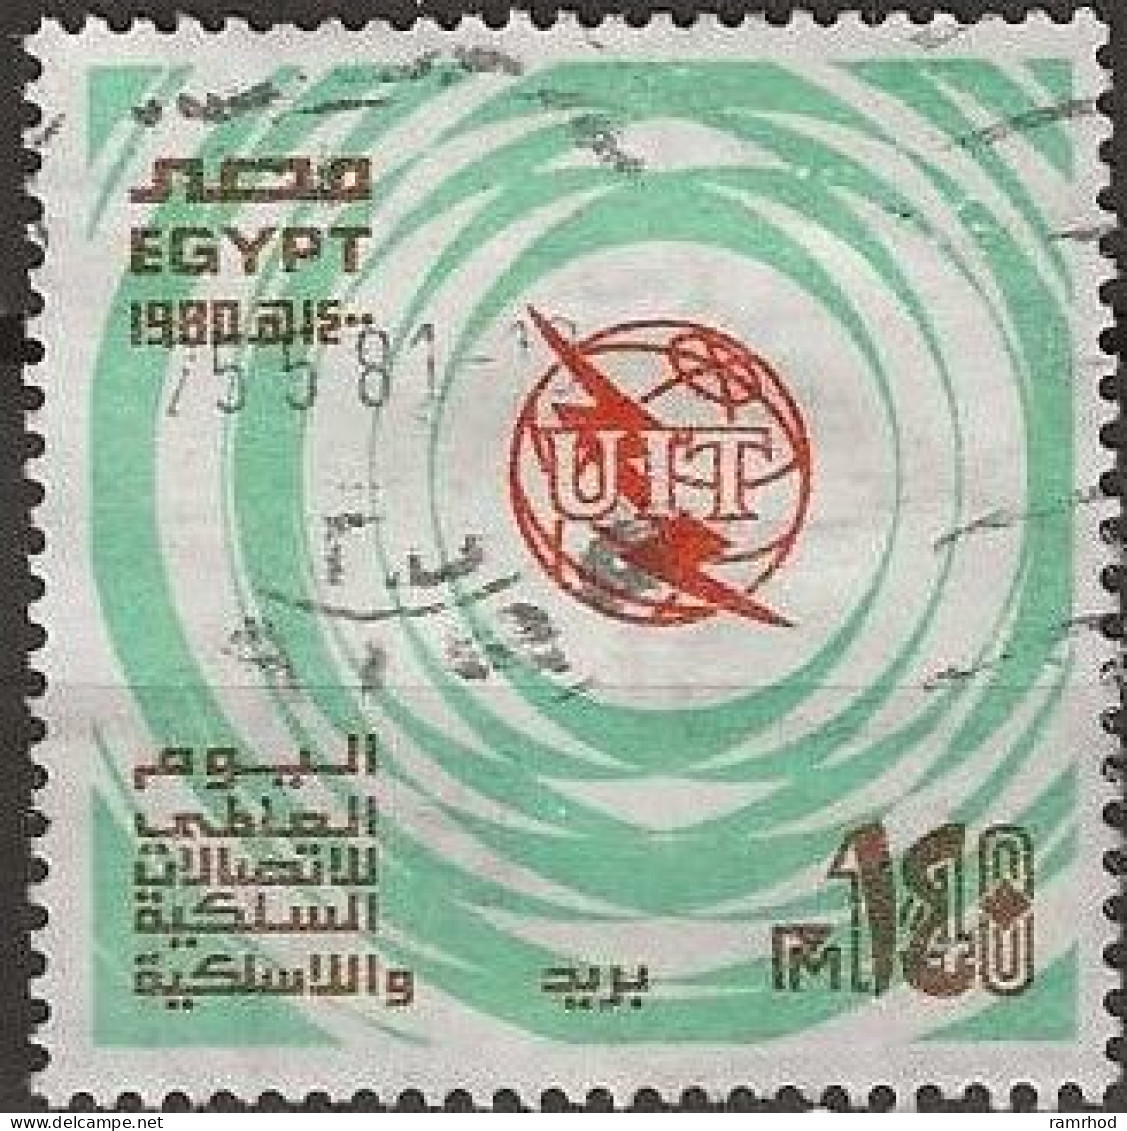 EGYPT 1980 United Nations Day - 140m. ITU Emblem (International Tele-communications Day) FU - Gebruikt